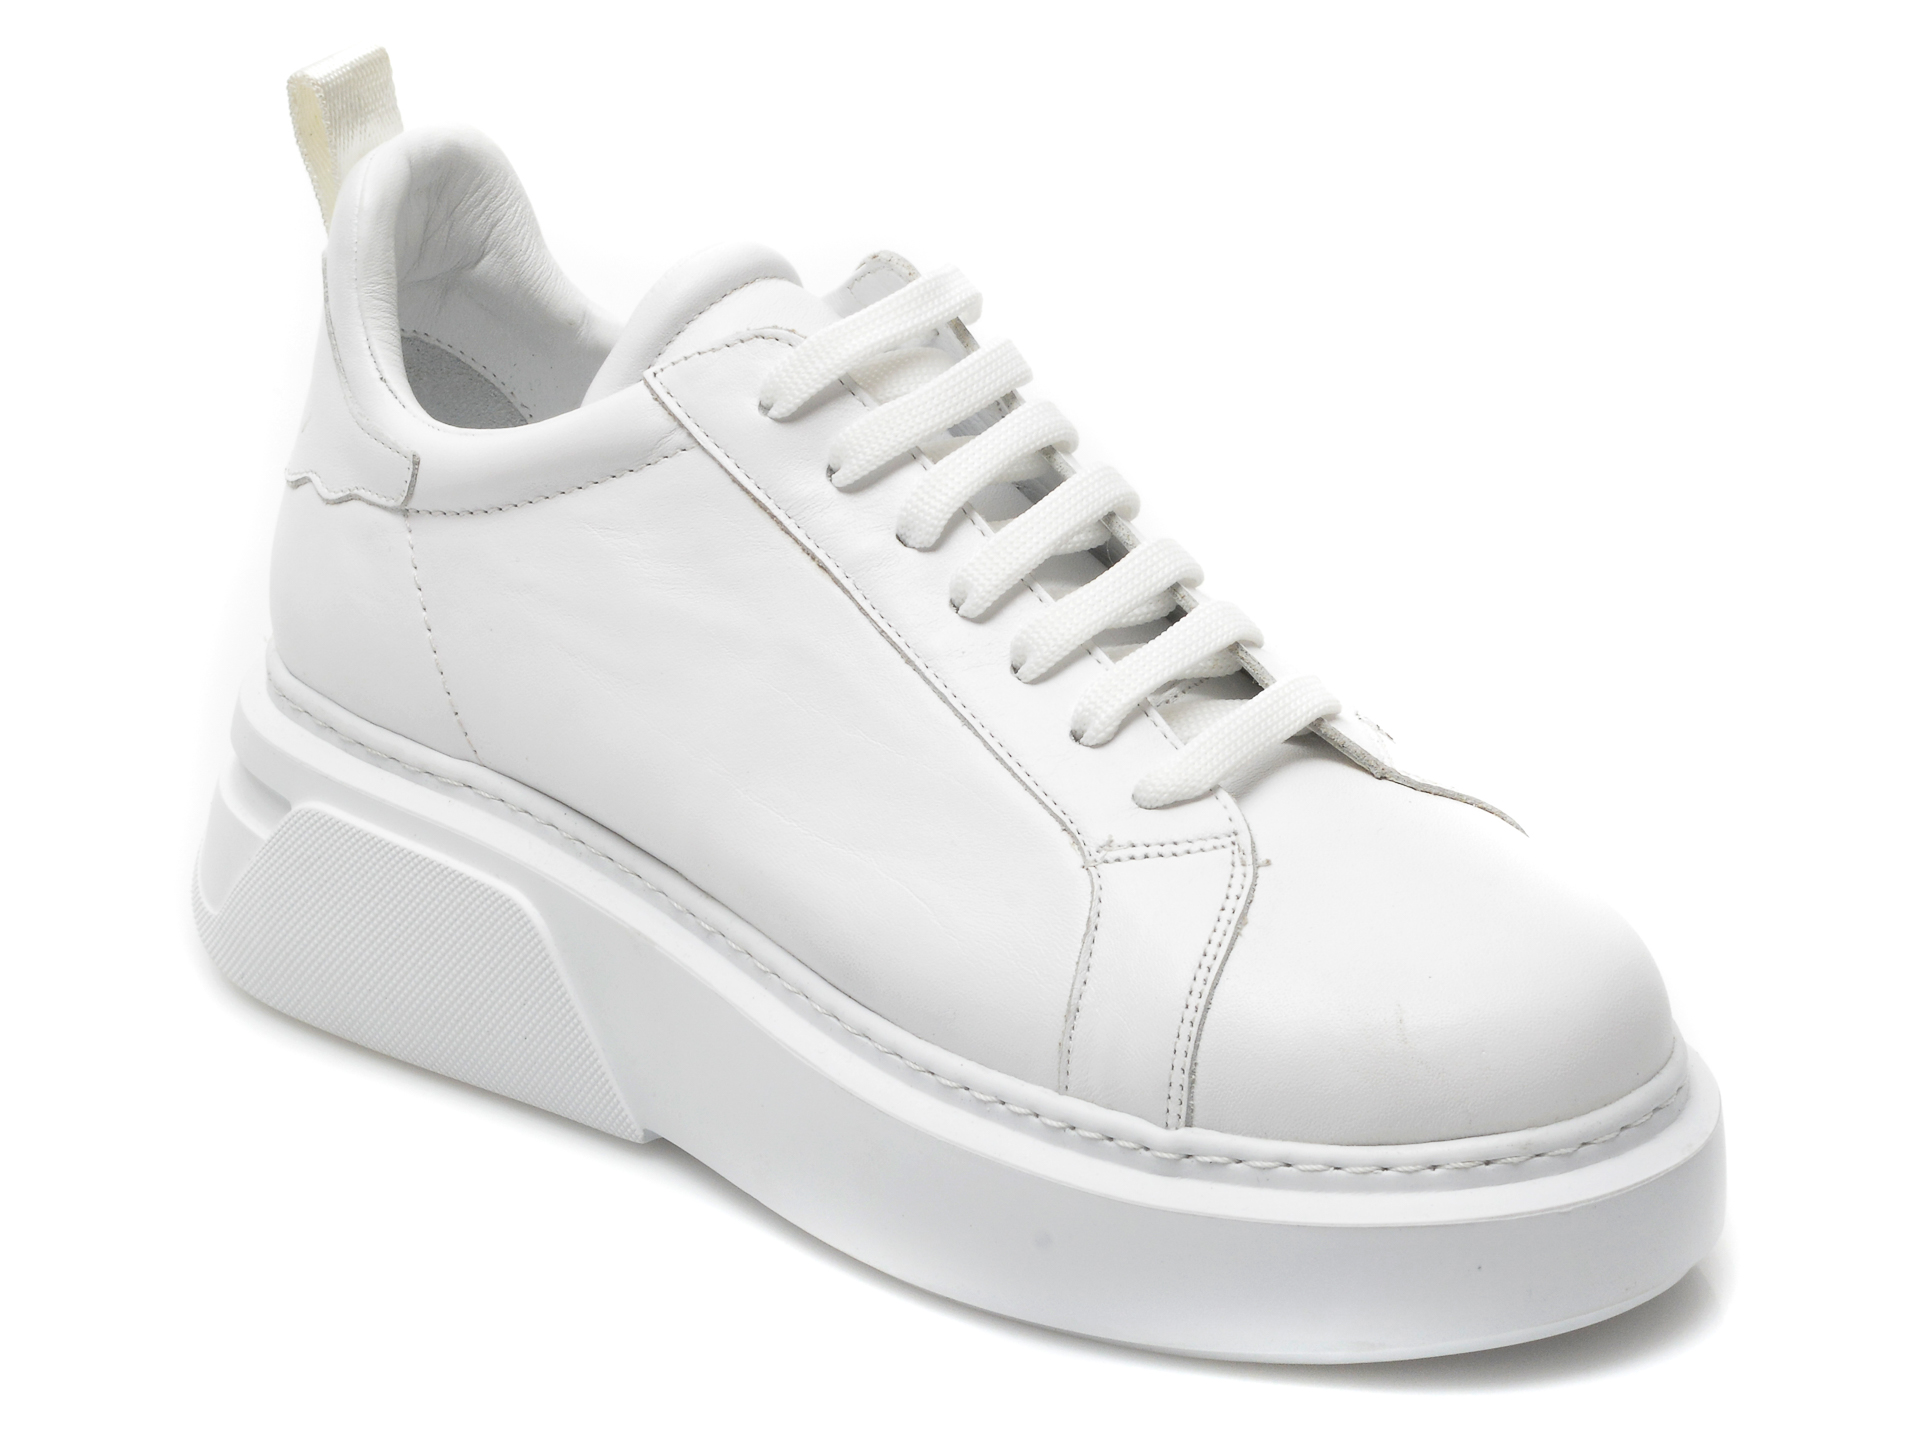 Pantofi sport MAGNOLYA albi, 2291, din piele naturala MAGNOLYA MAGNOLYA